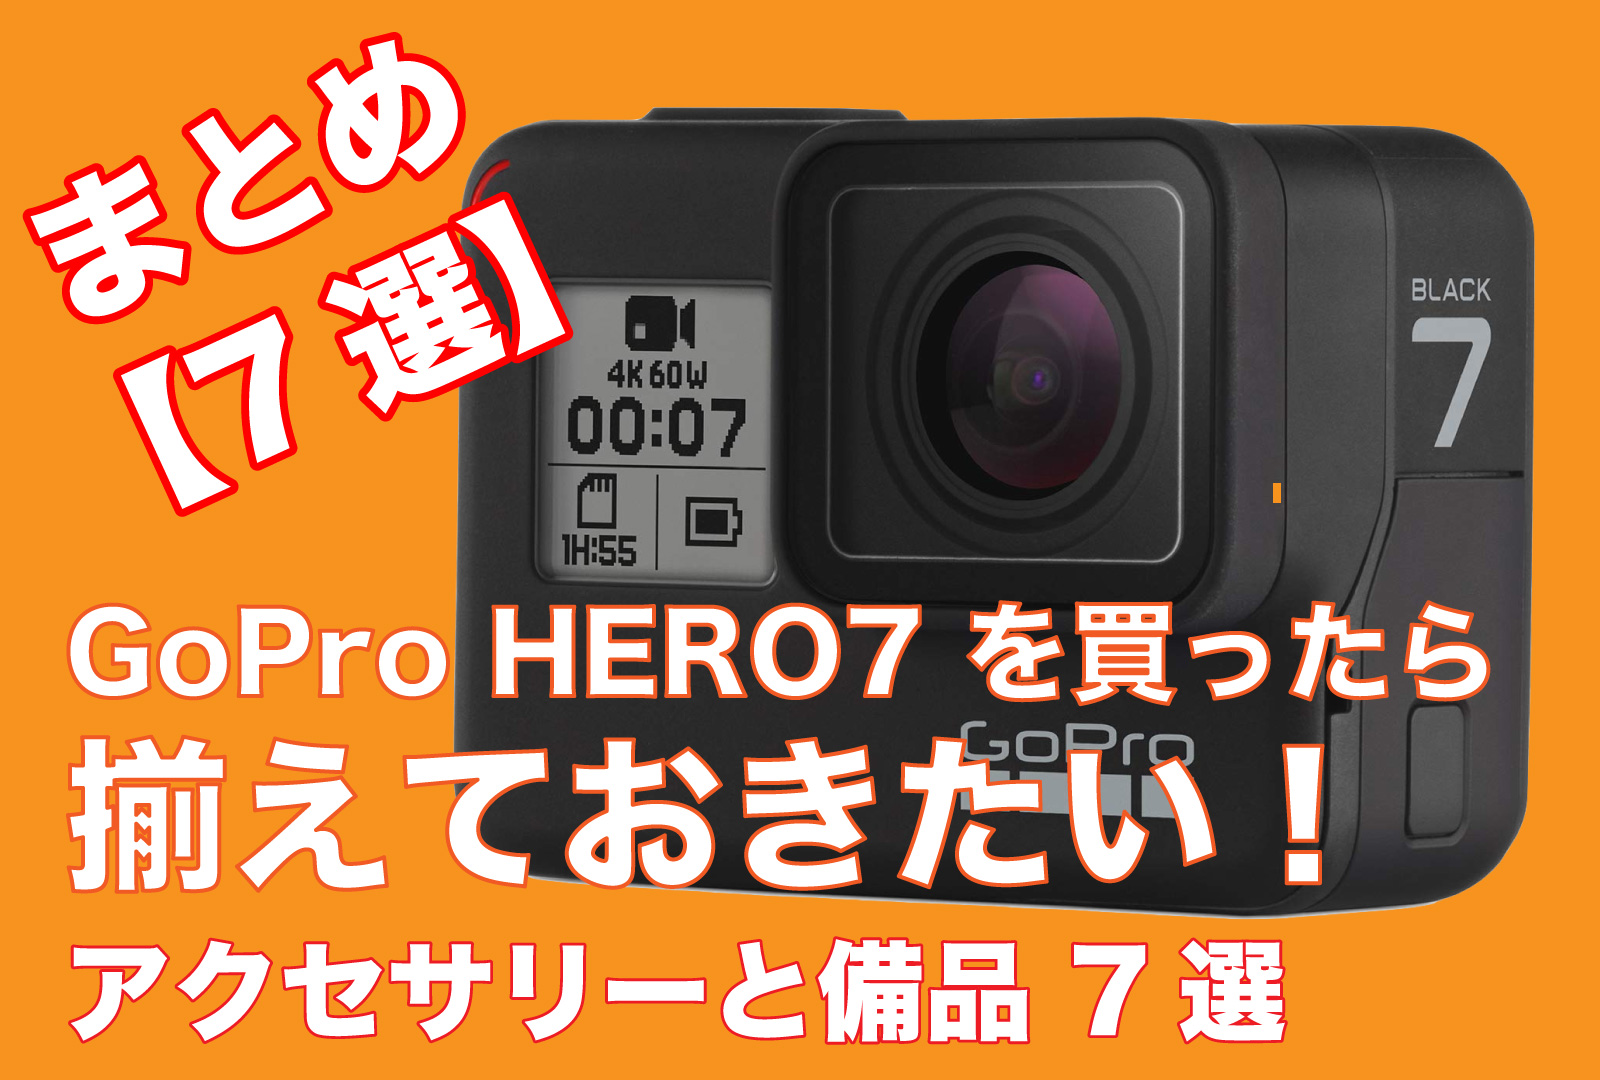 GoPro HERO7 BLACK アクセサリー等 bspnet.id